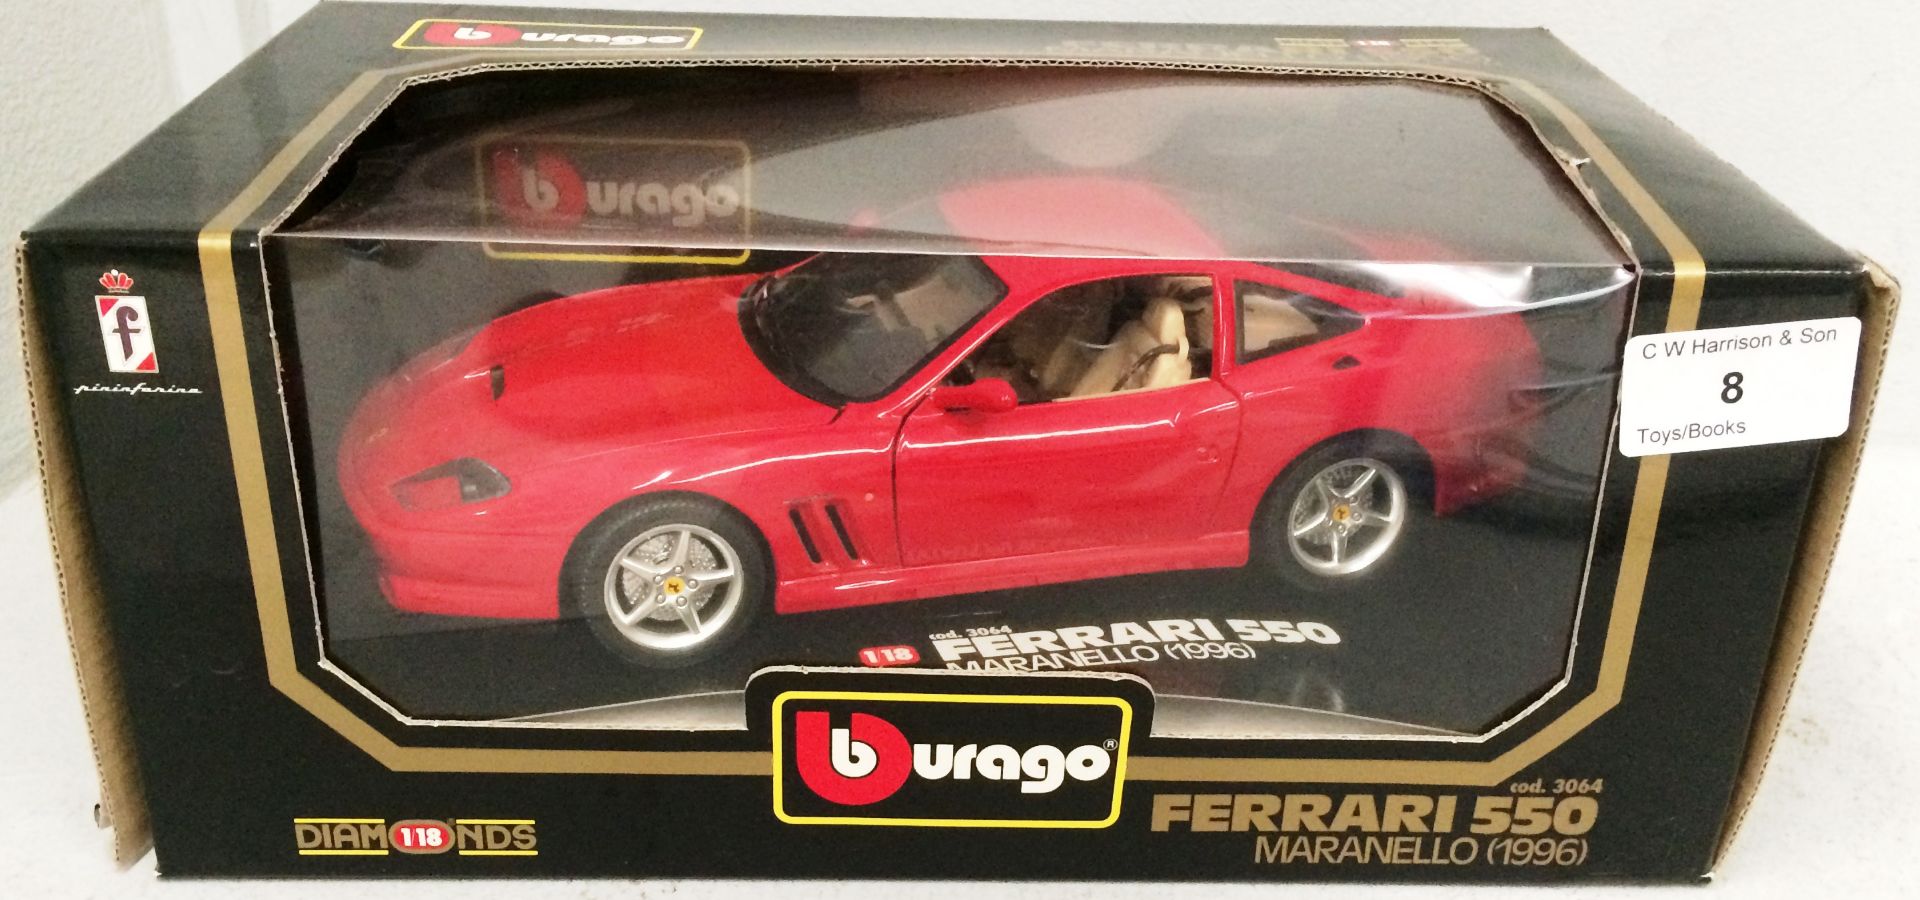 Burago 1/18 scale die cast metal model of Ferrari 550 Maranello (1996) (boxed)